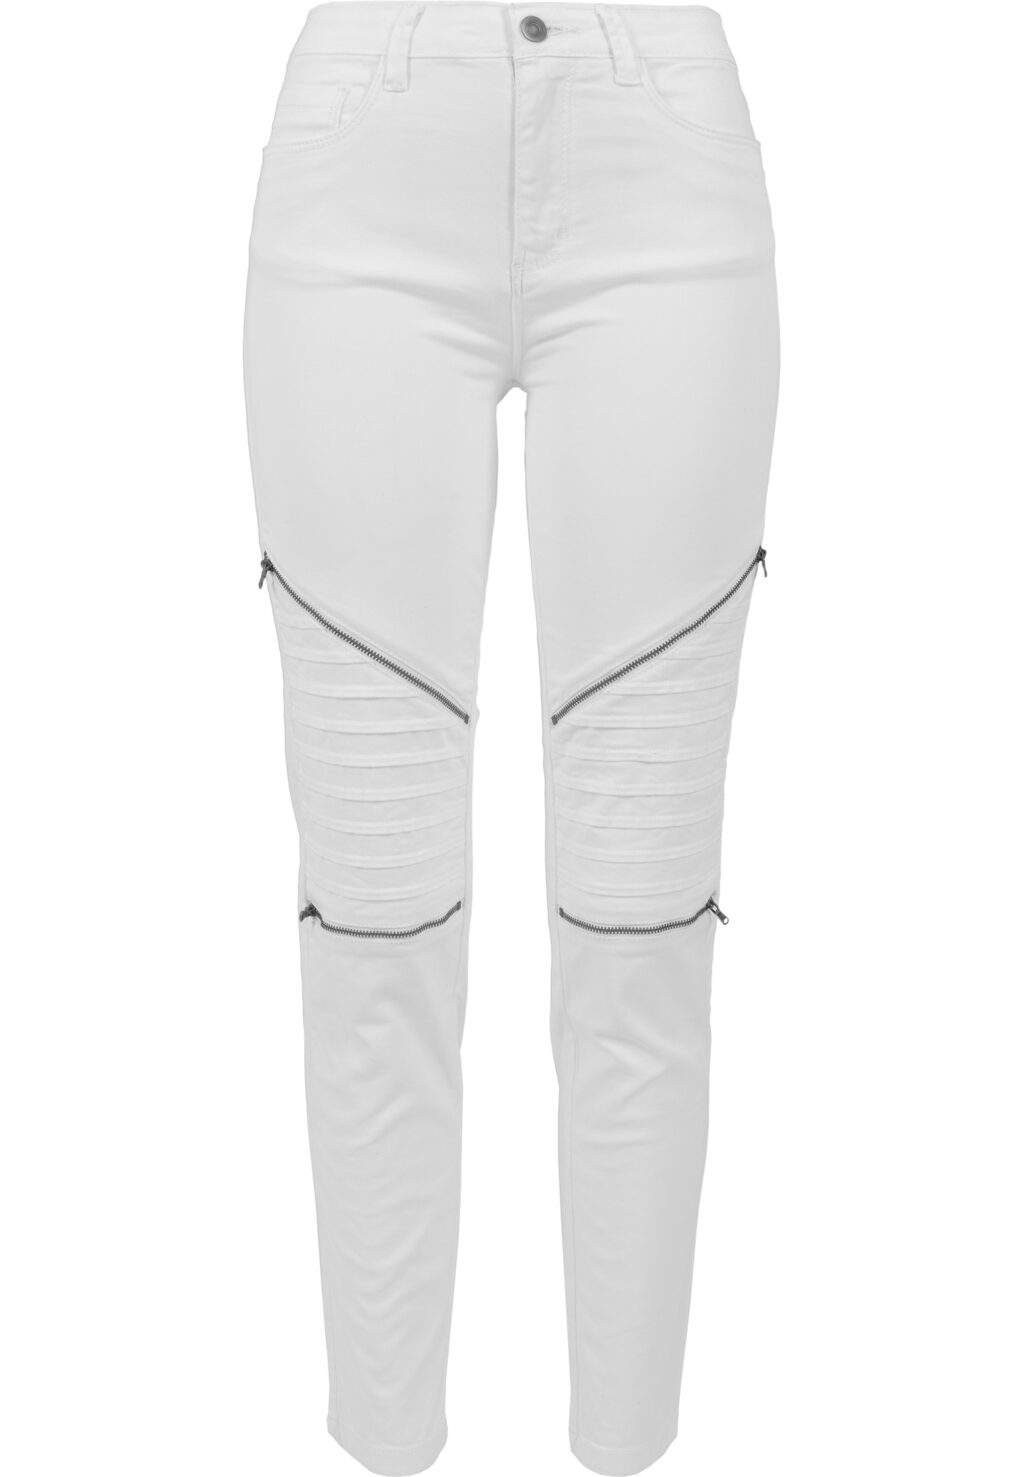 Urban Classics Ladies Stretch Biker Pants white TB1215